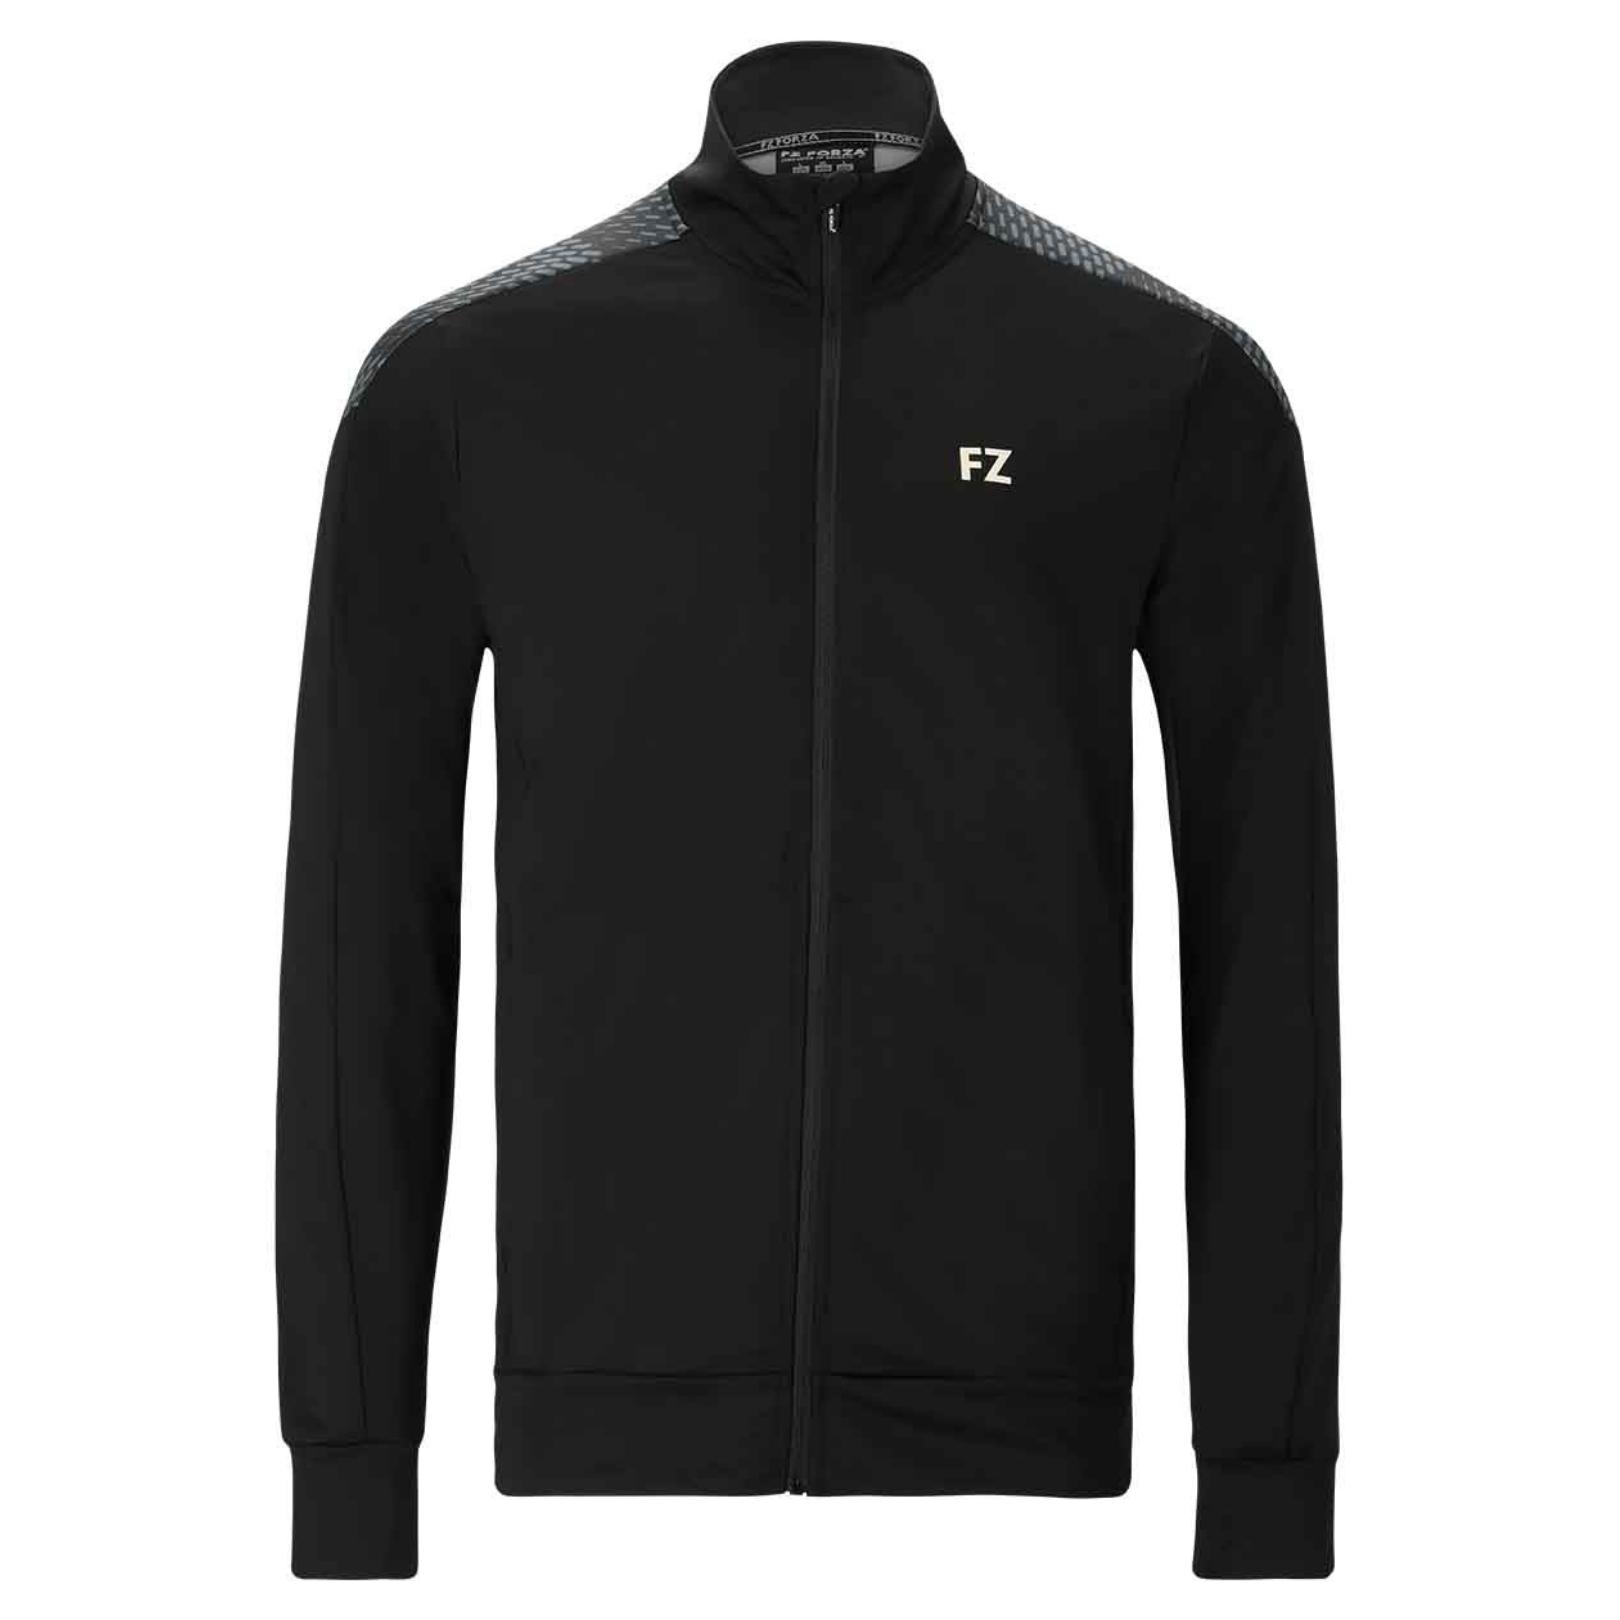 Forza Cantan Jr. Track | Badminton jacket » Low price